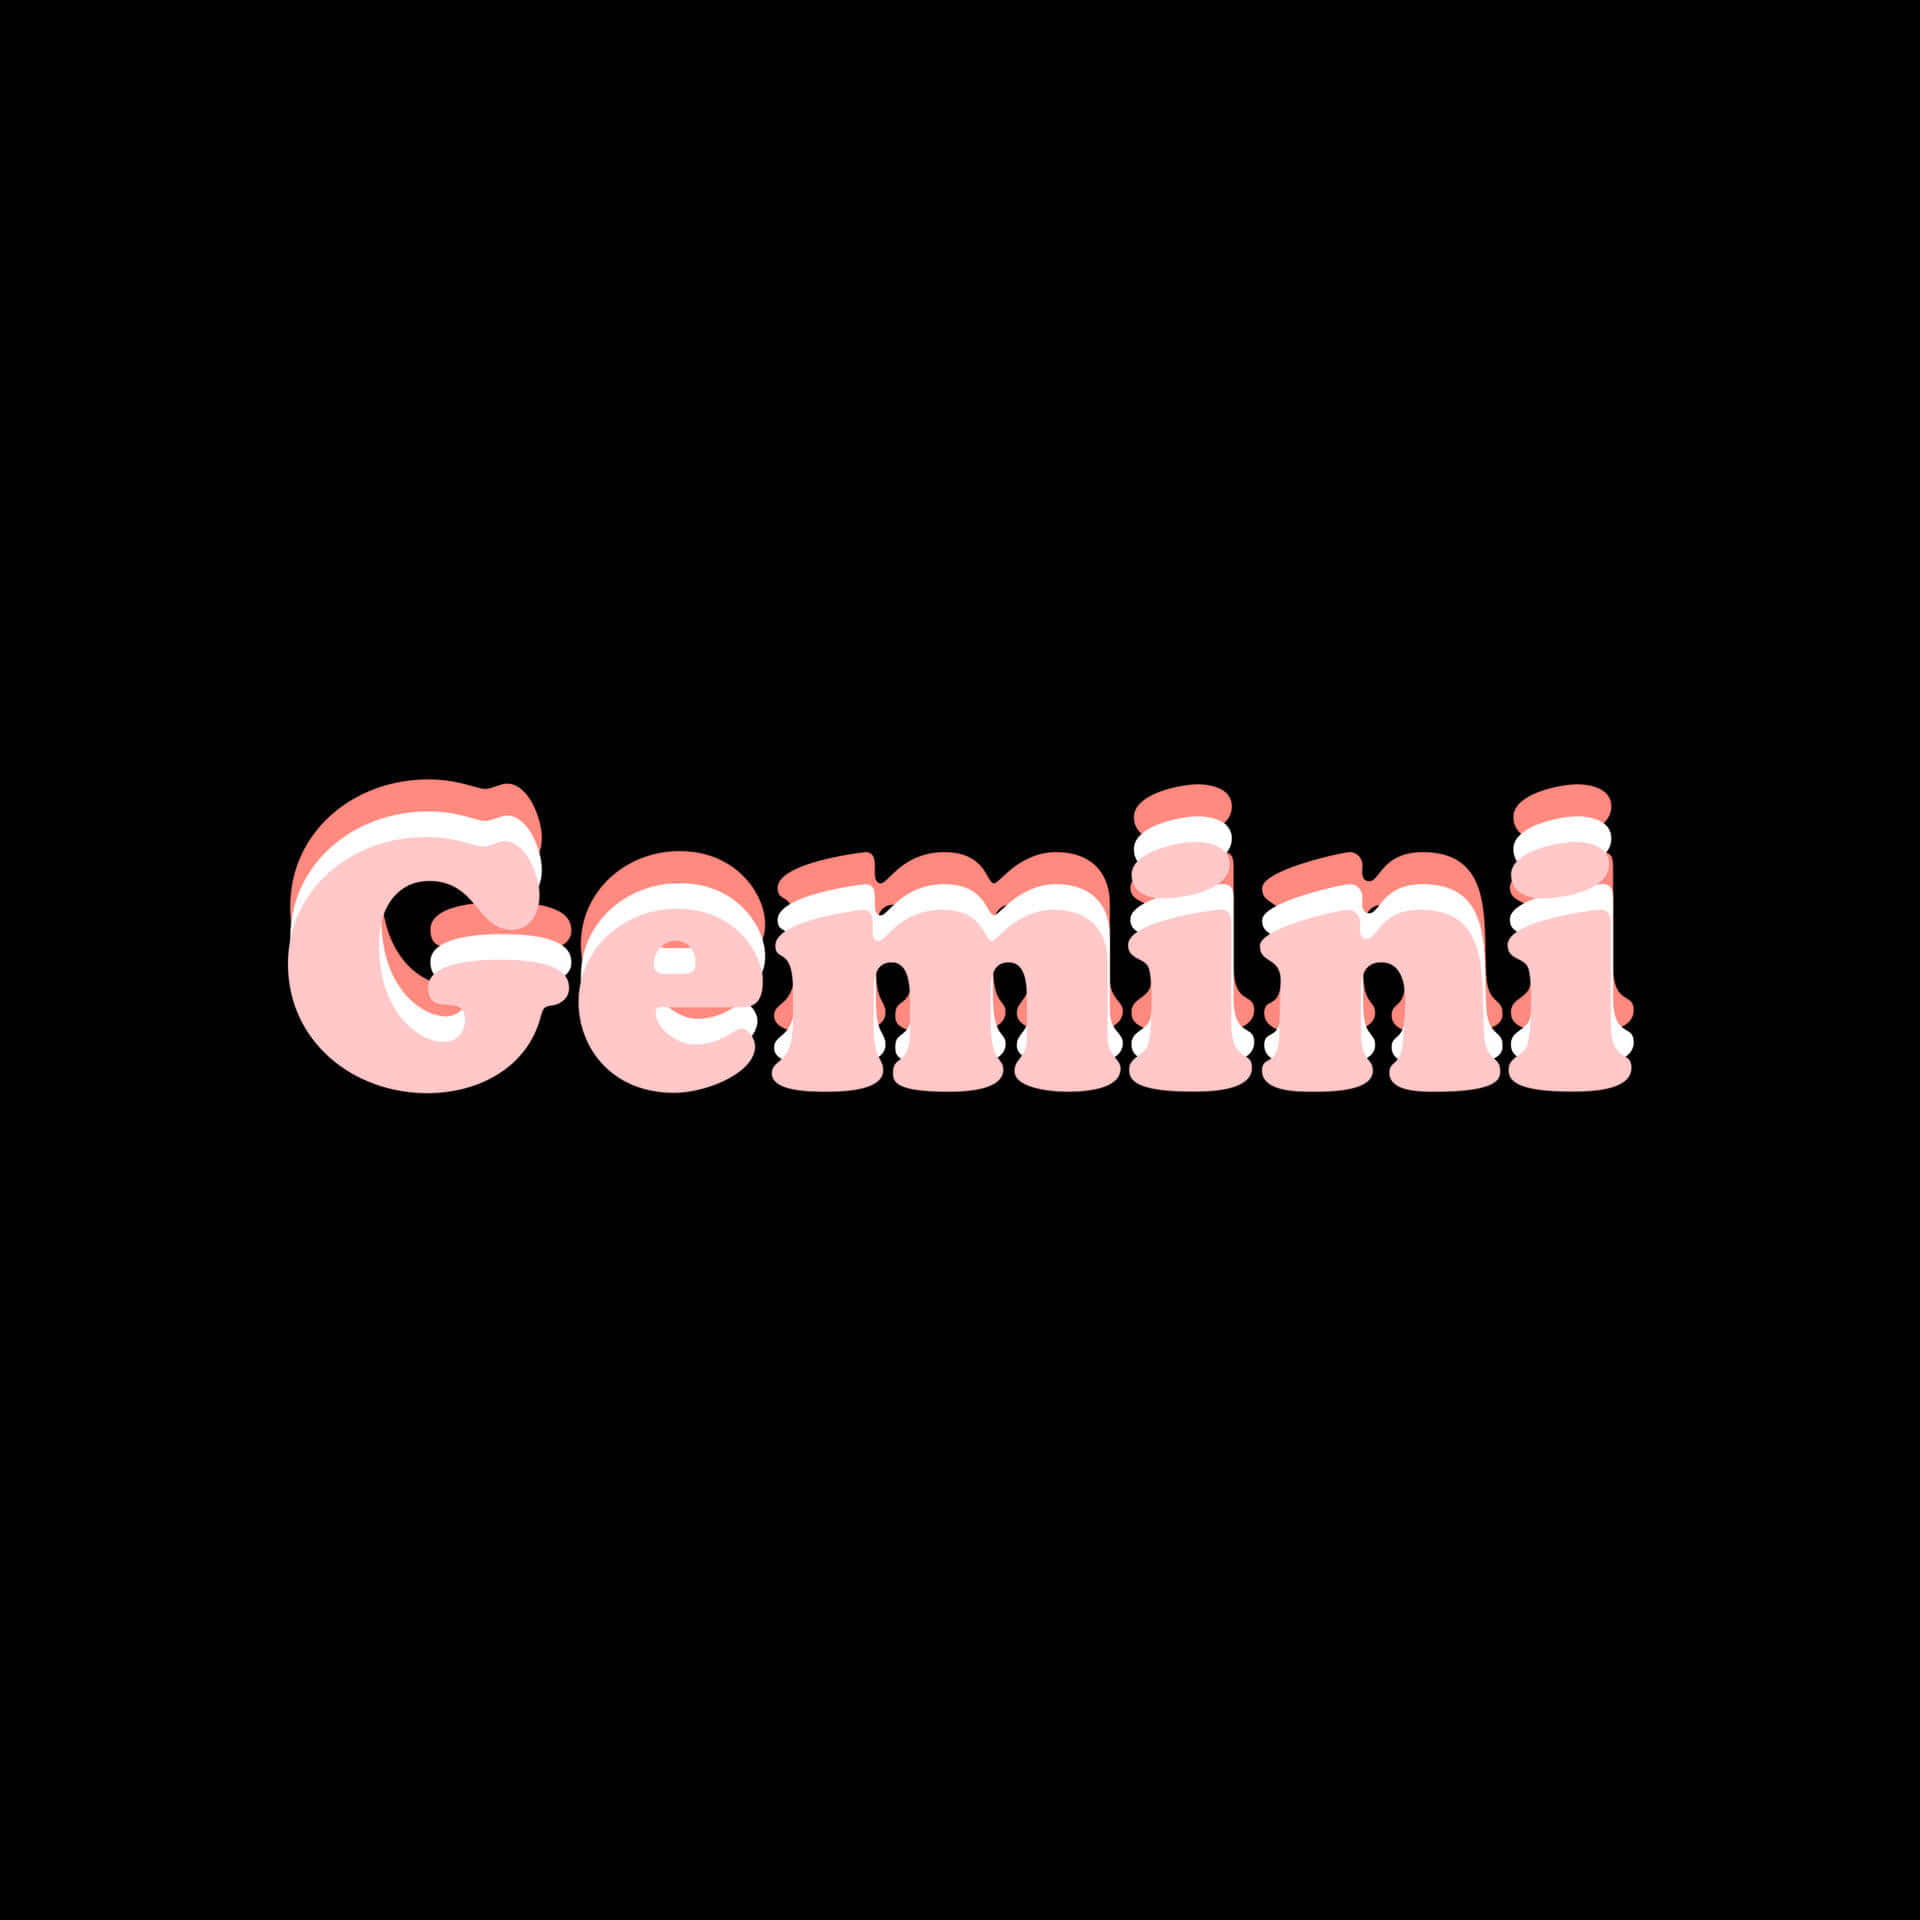 Pink Gemini Texton Black Background Wallpaper